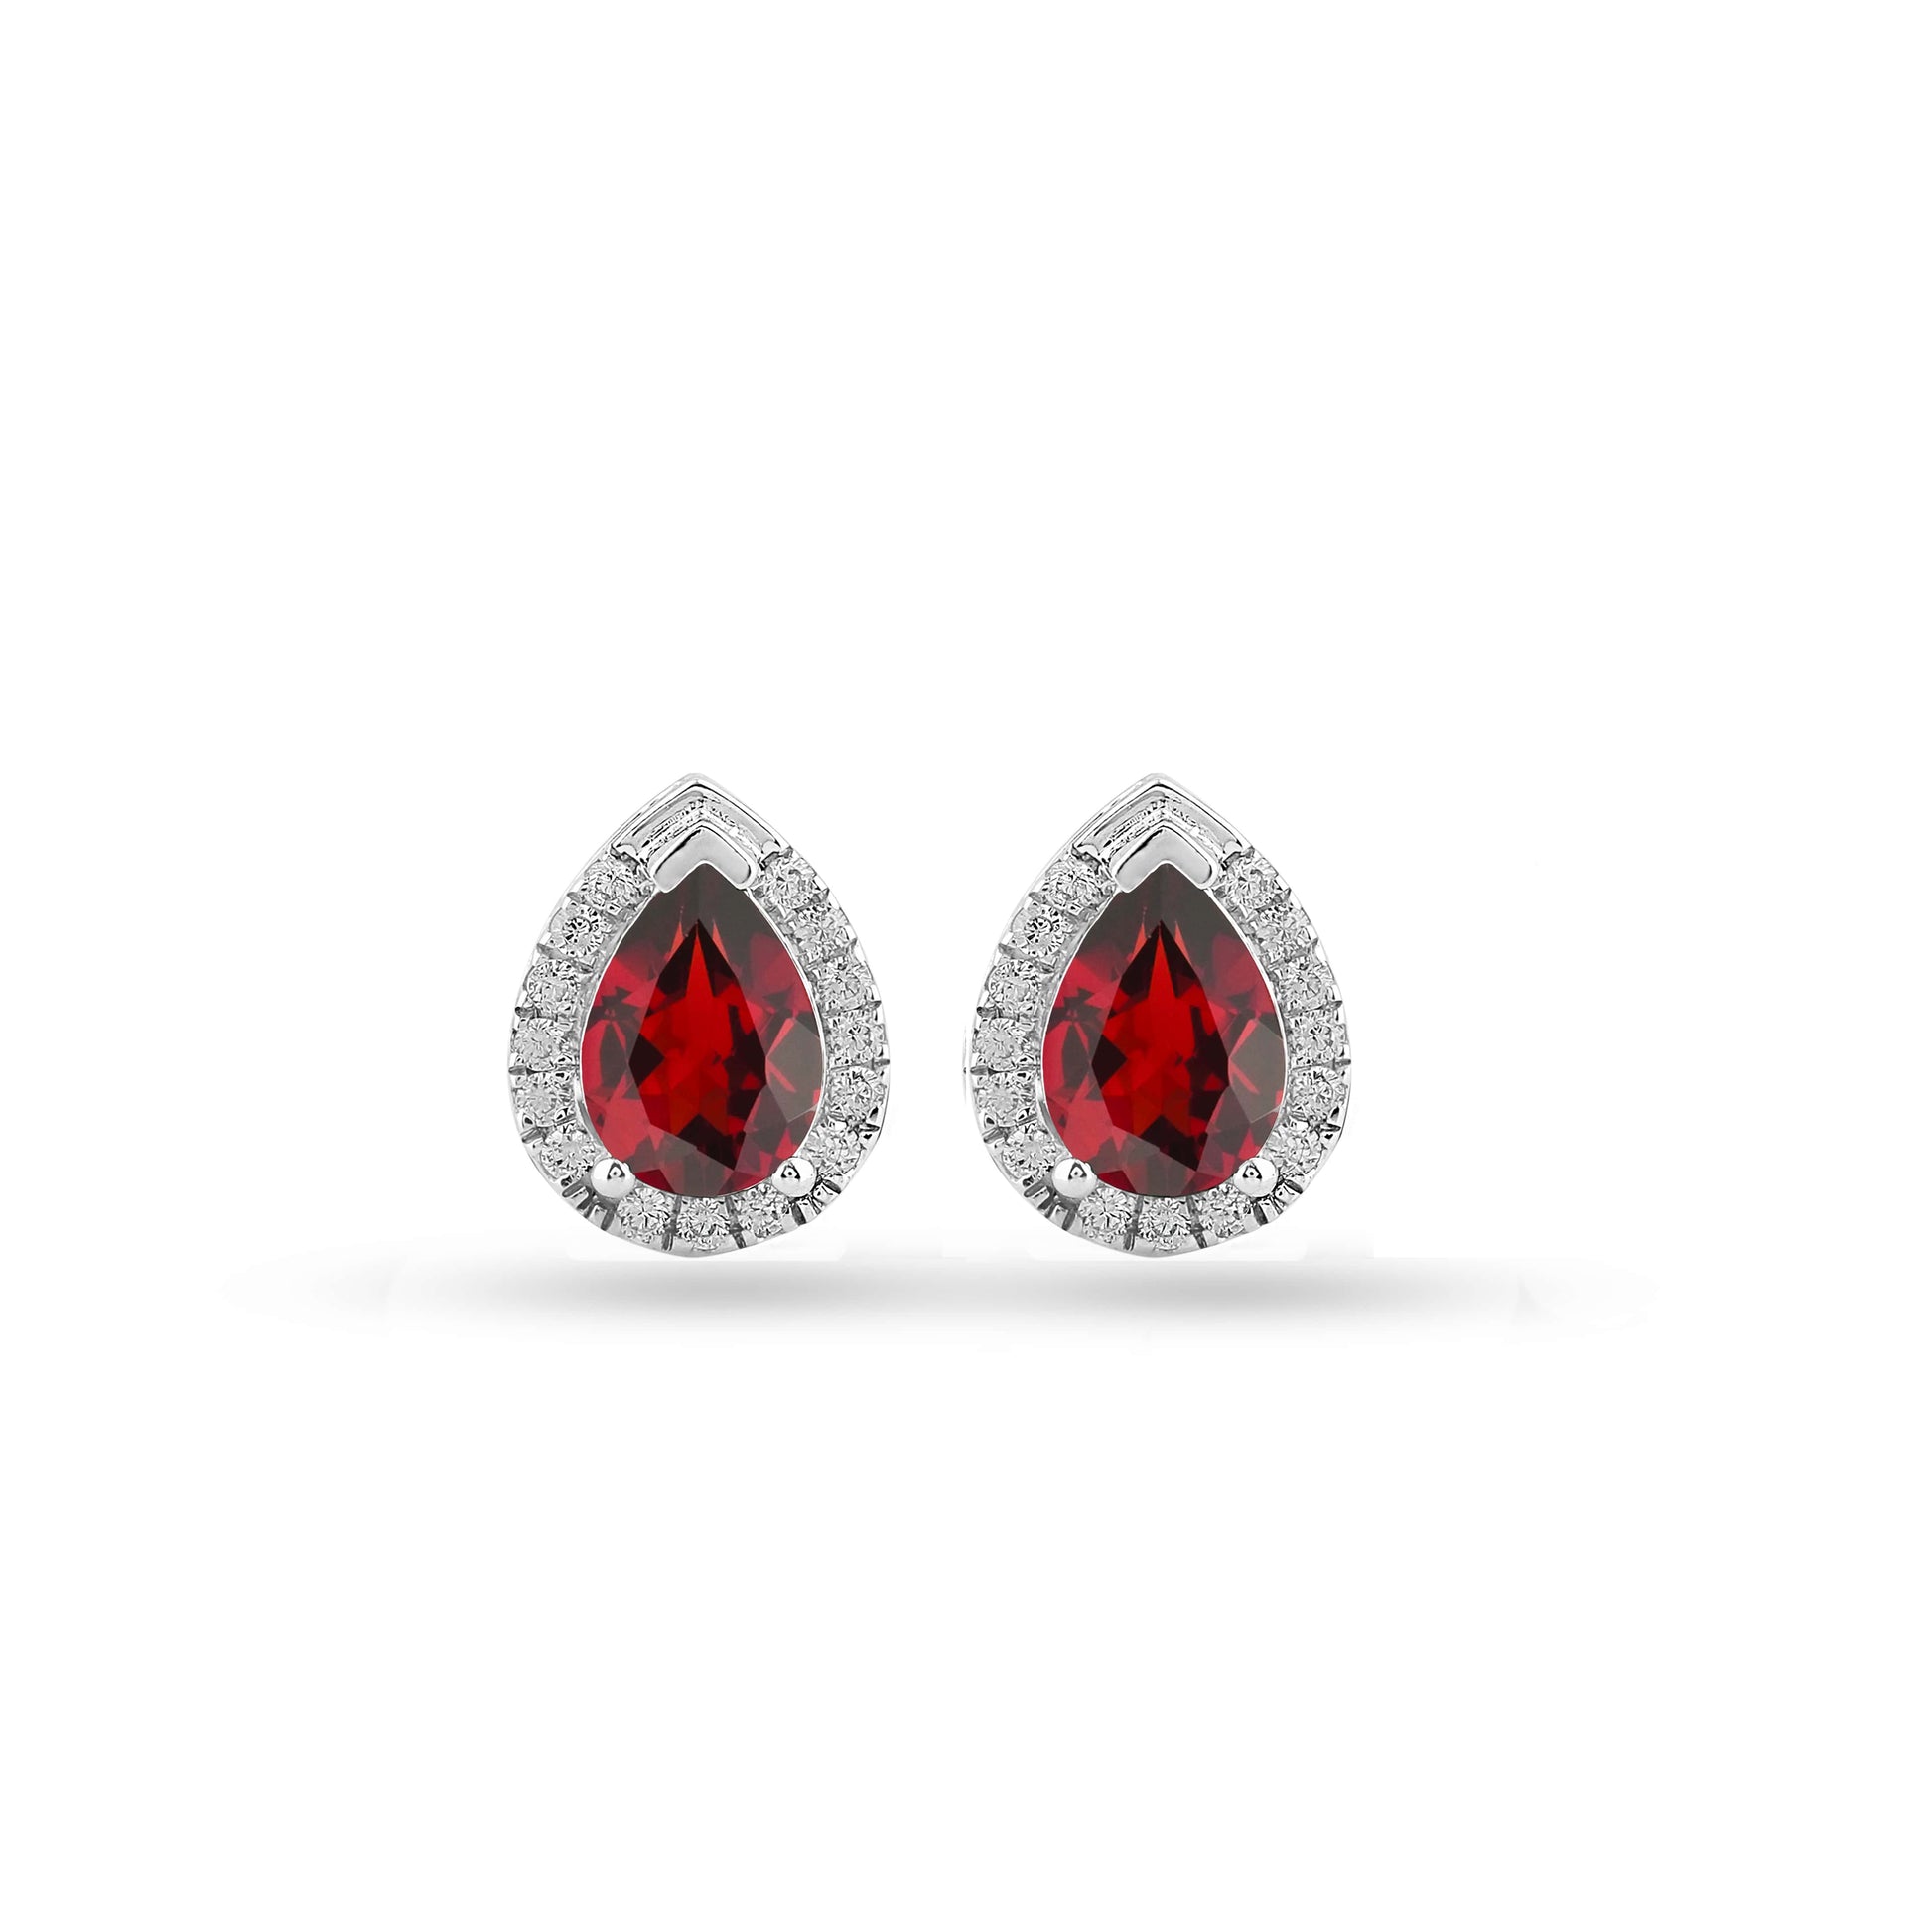 Garnet gemstone earrings